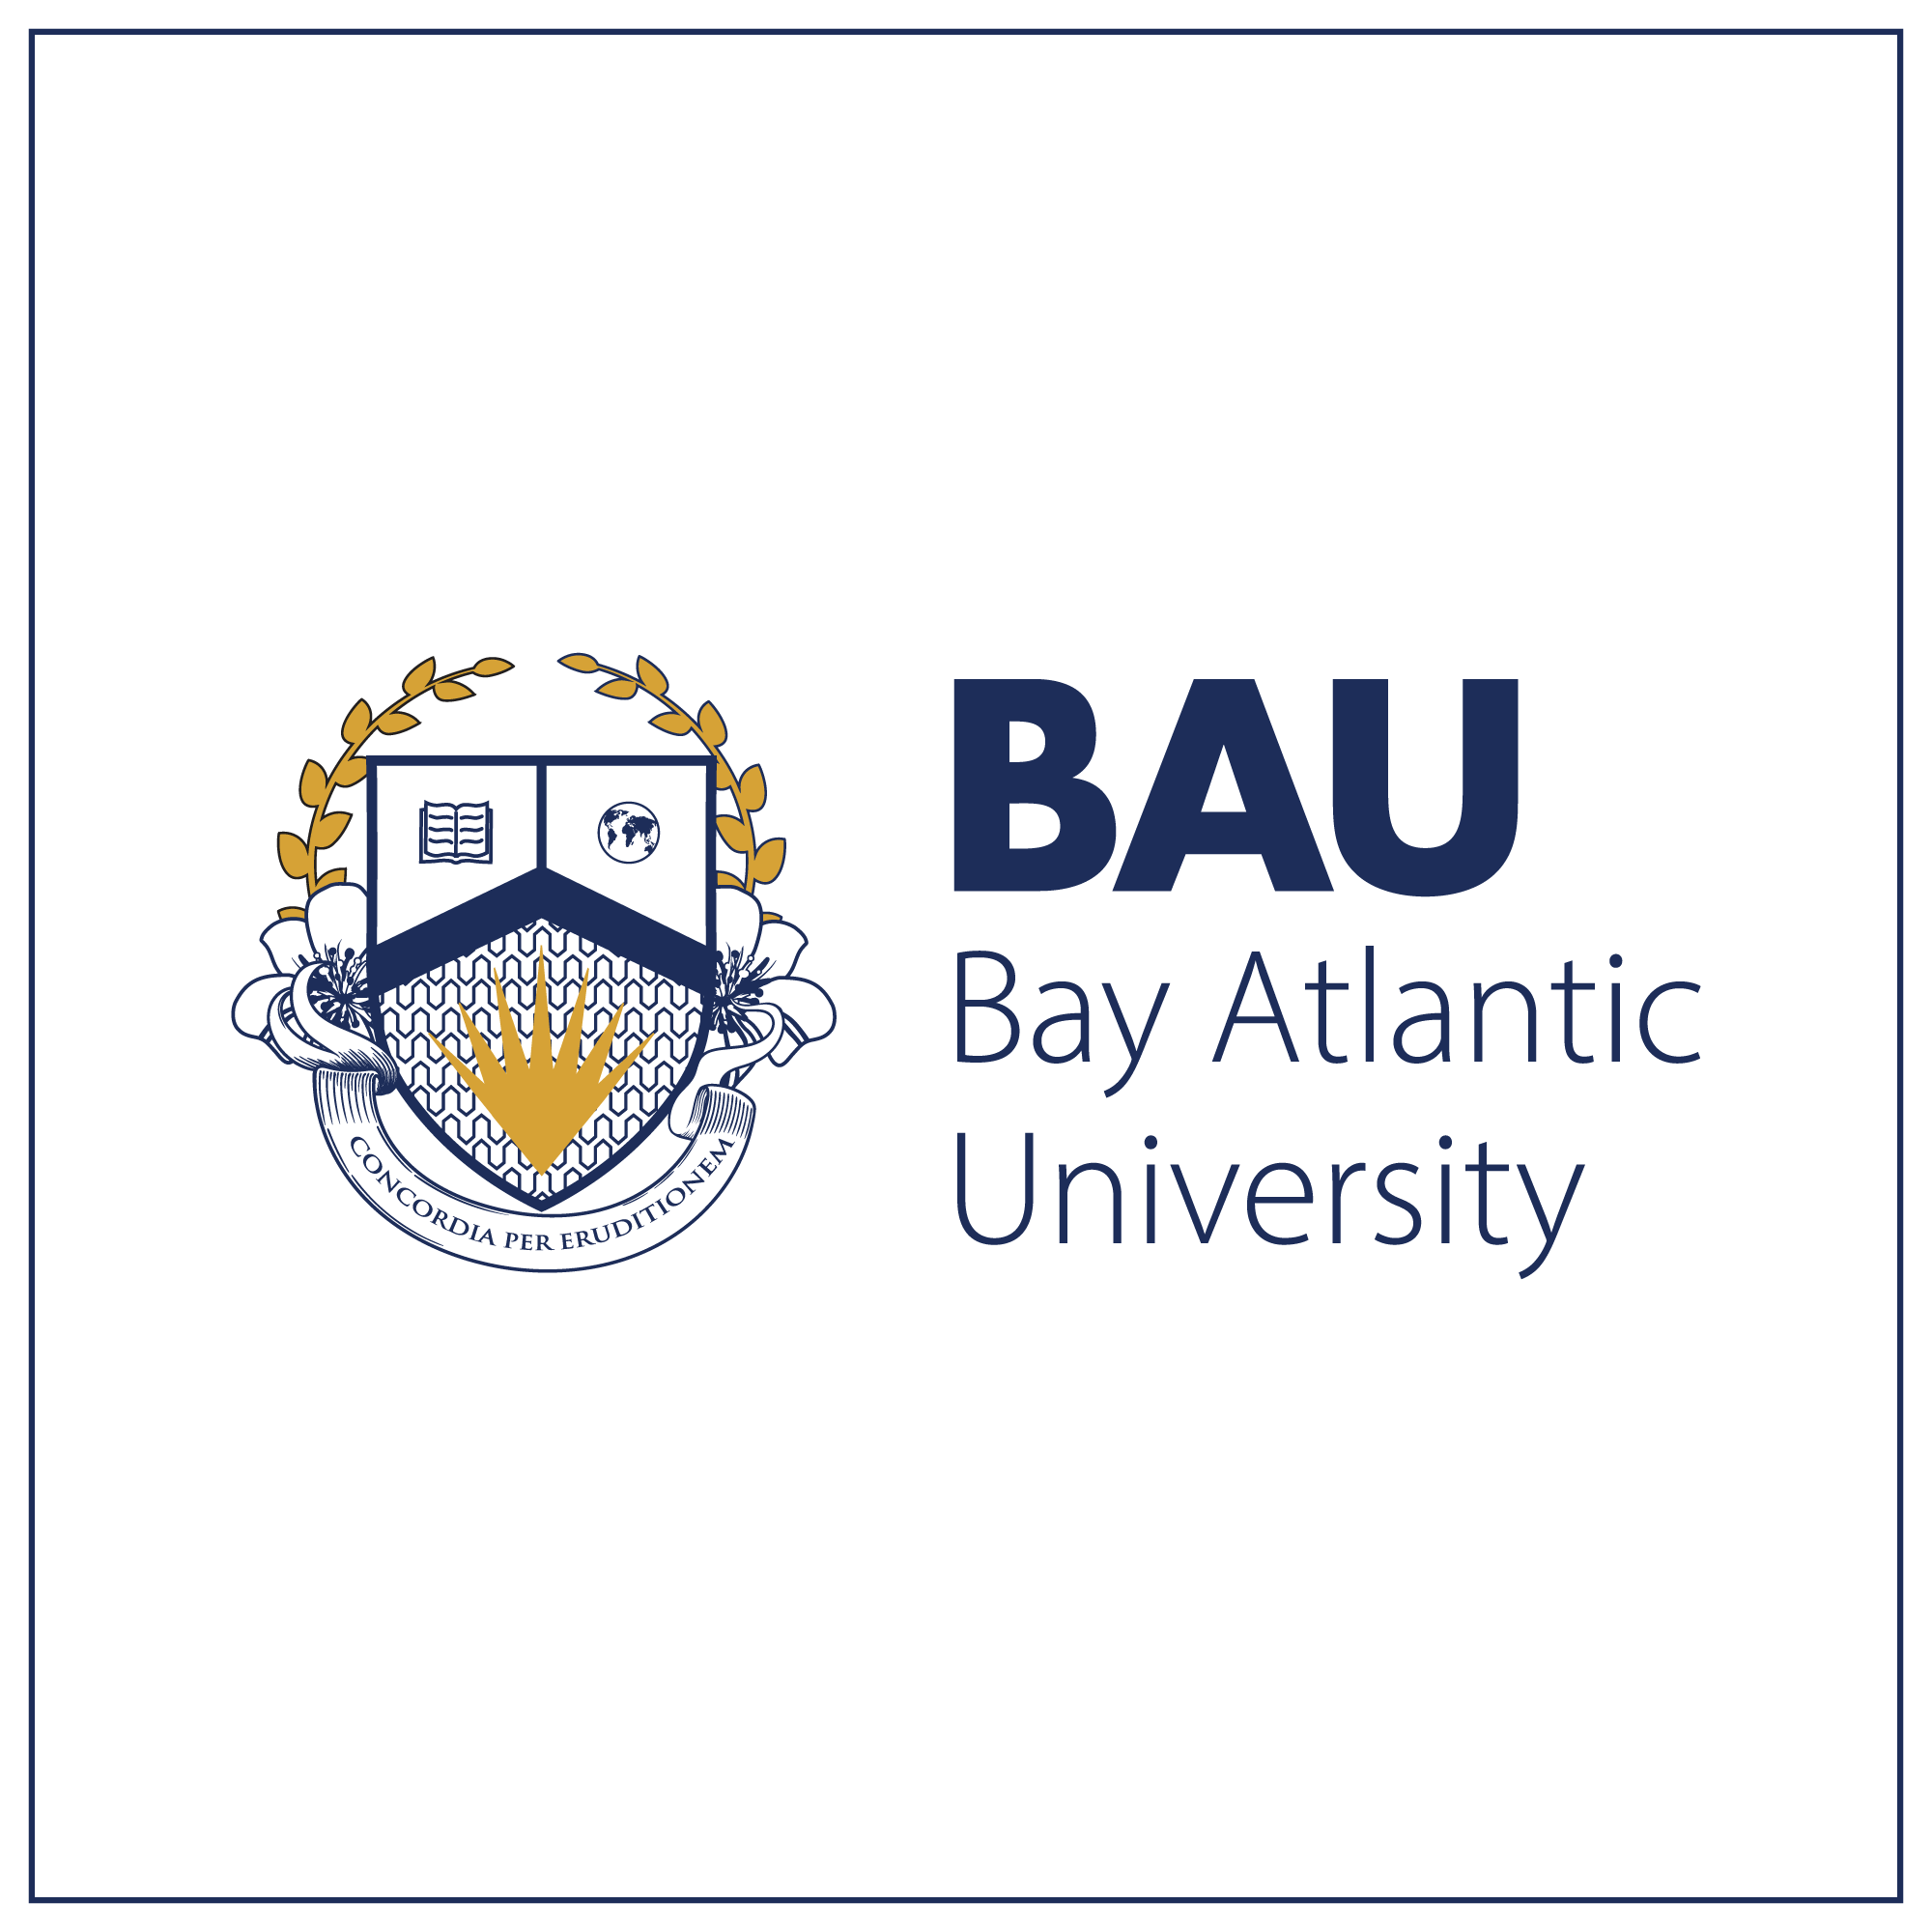 Acics Logo - Bay Atlantic University (BAU) Recovers Its Accreditation | Center ...